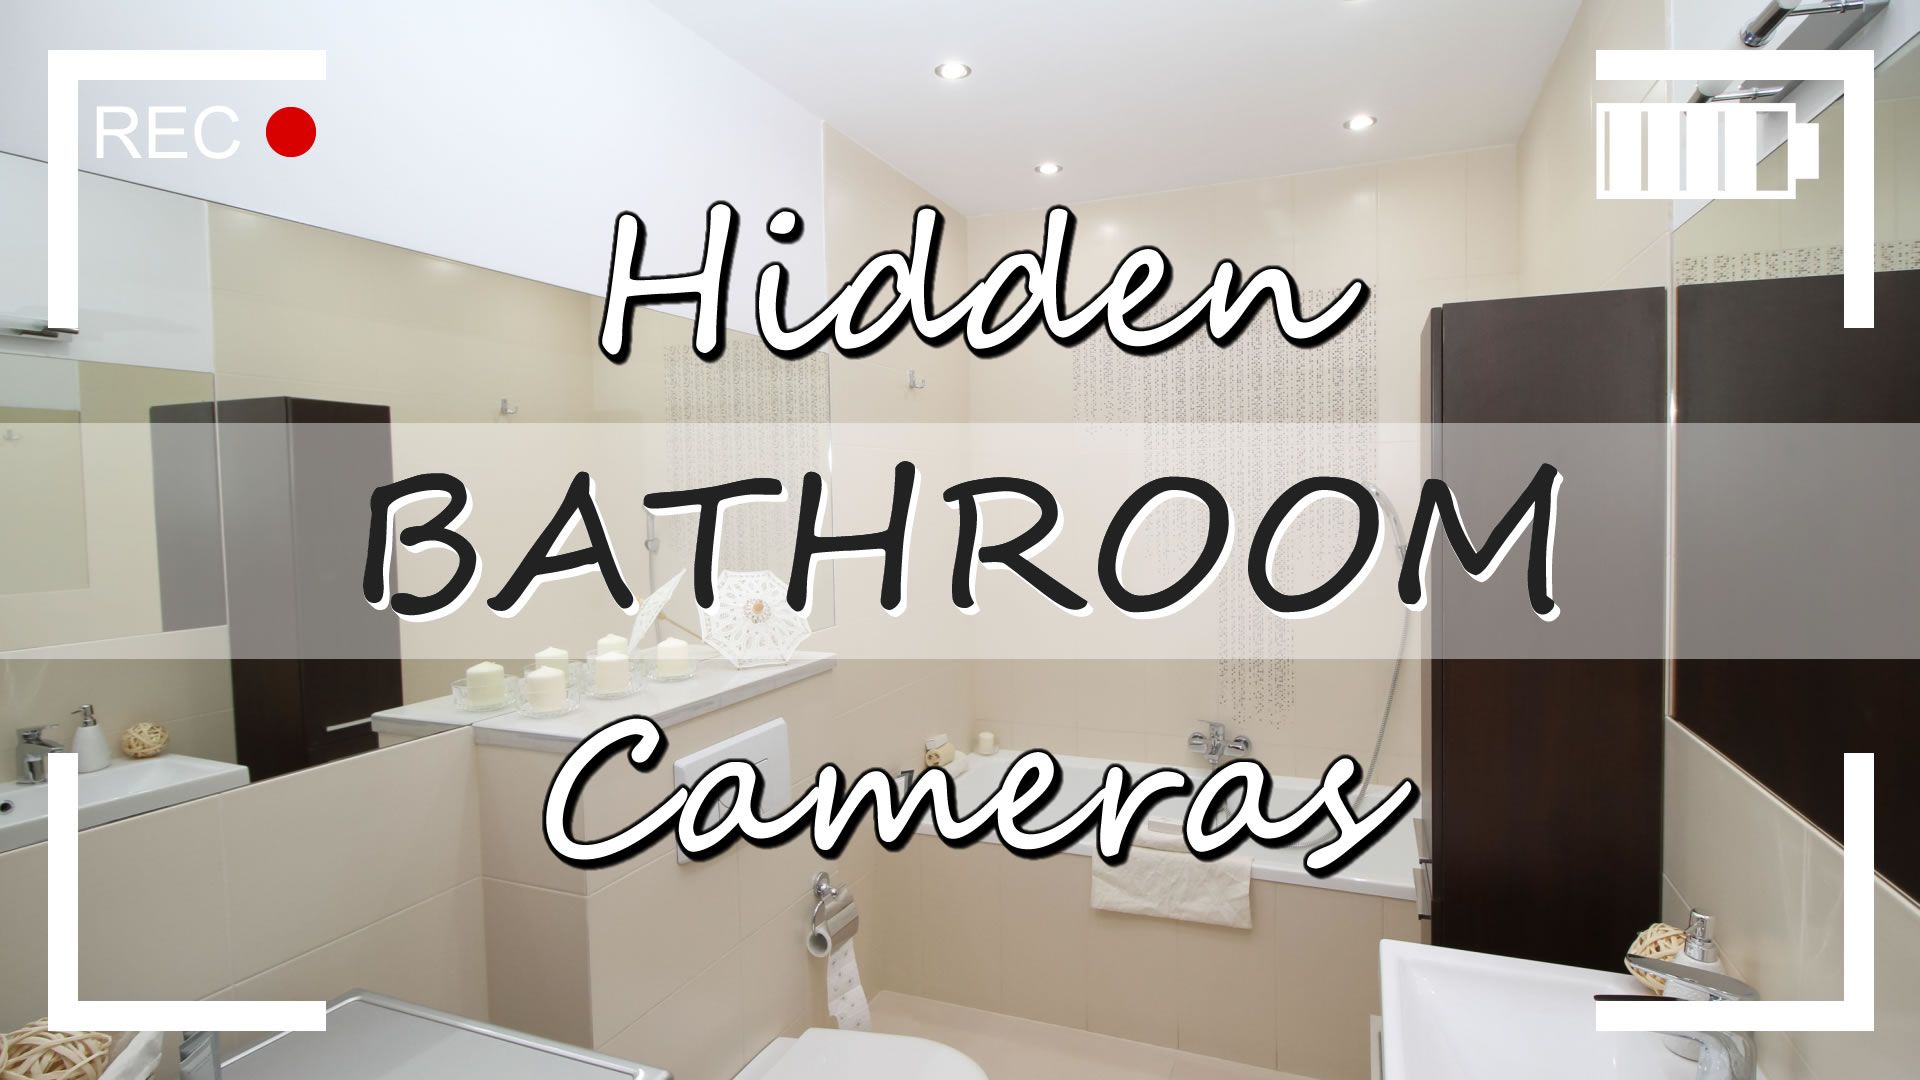 ben christensen recommends spy camera in bathroom accessories pic